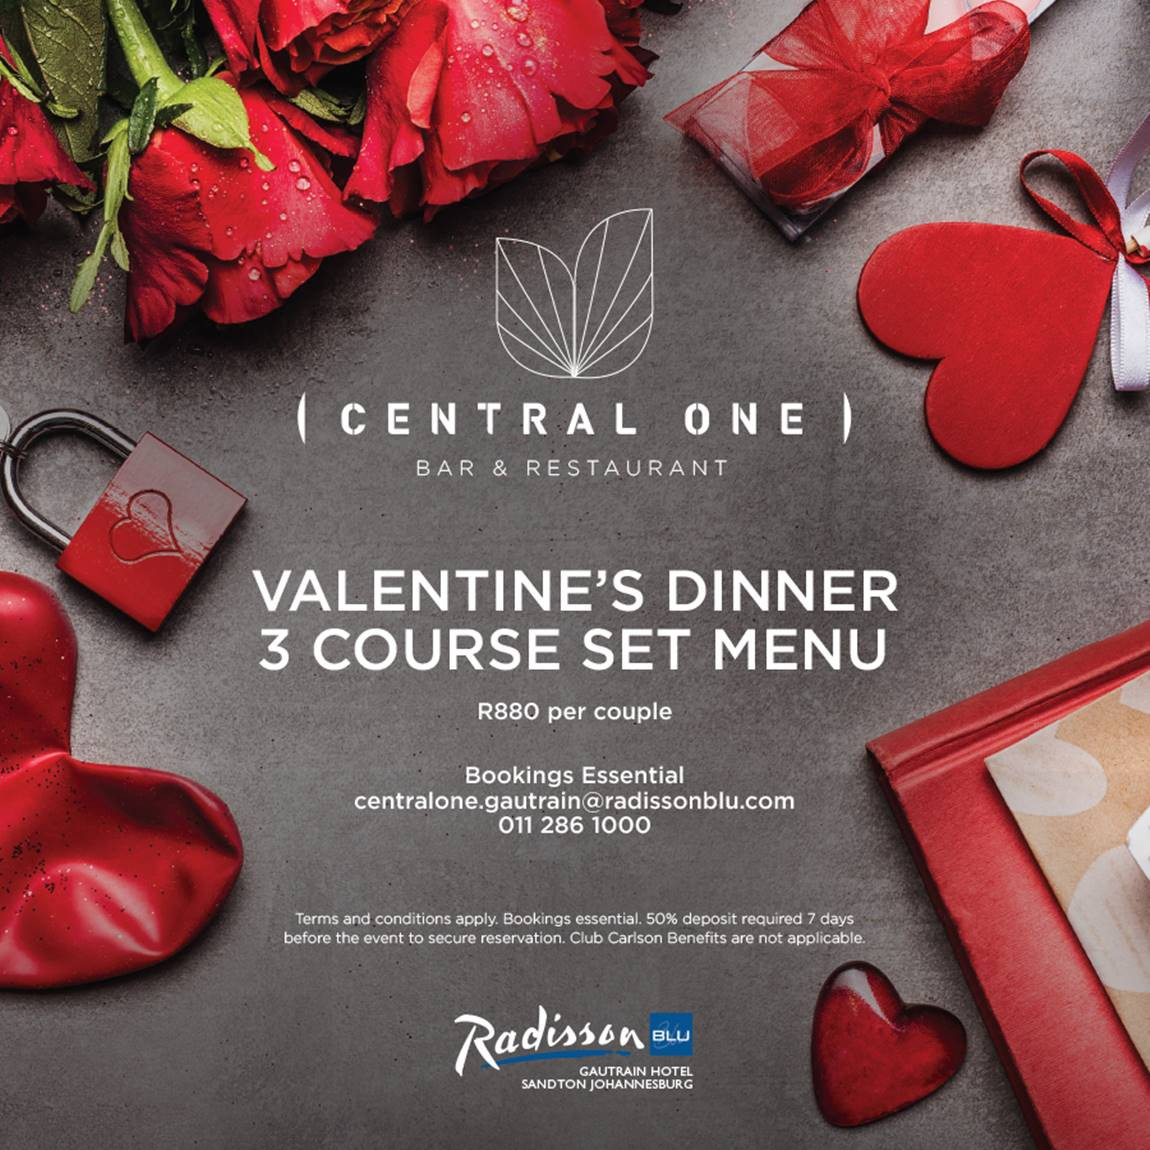 Valentines Dinner Restaurants
 Valentines Day Dinner at Central e Restaurant